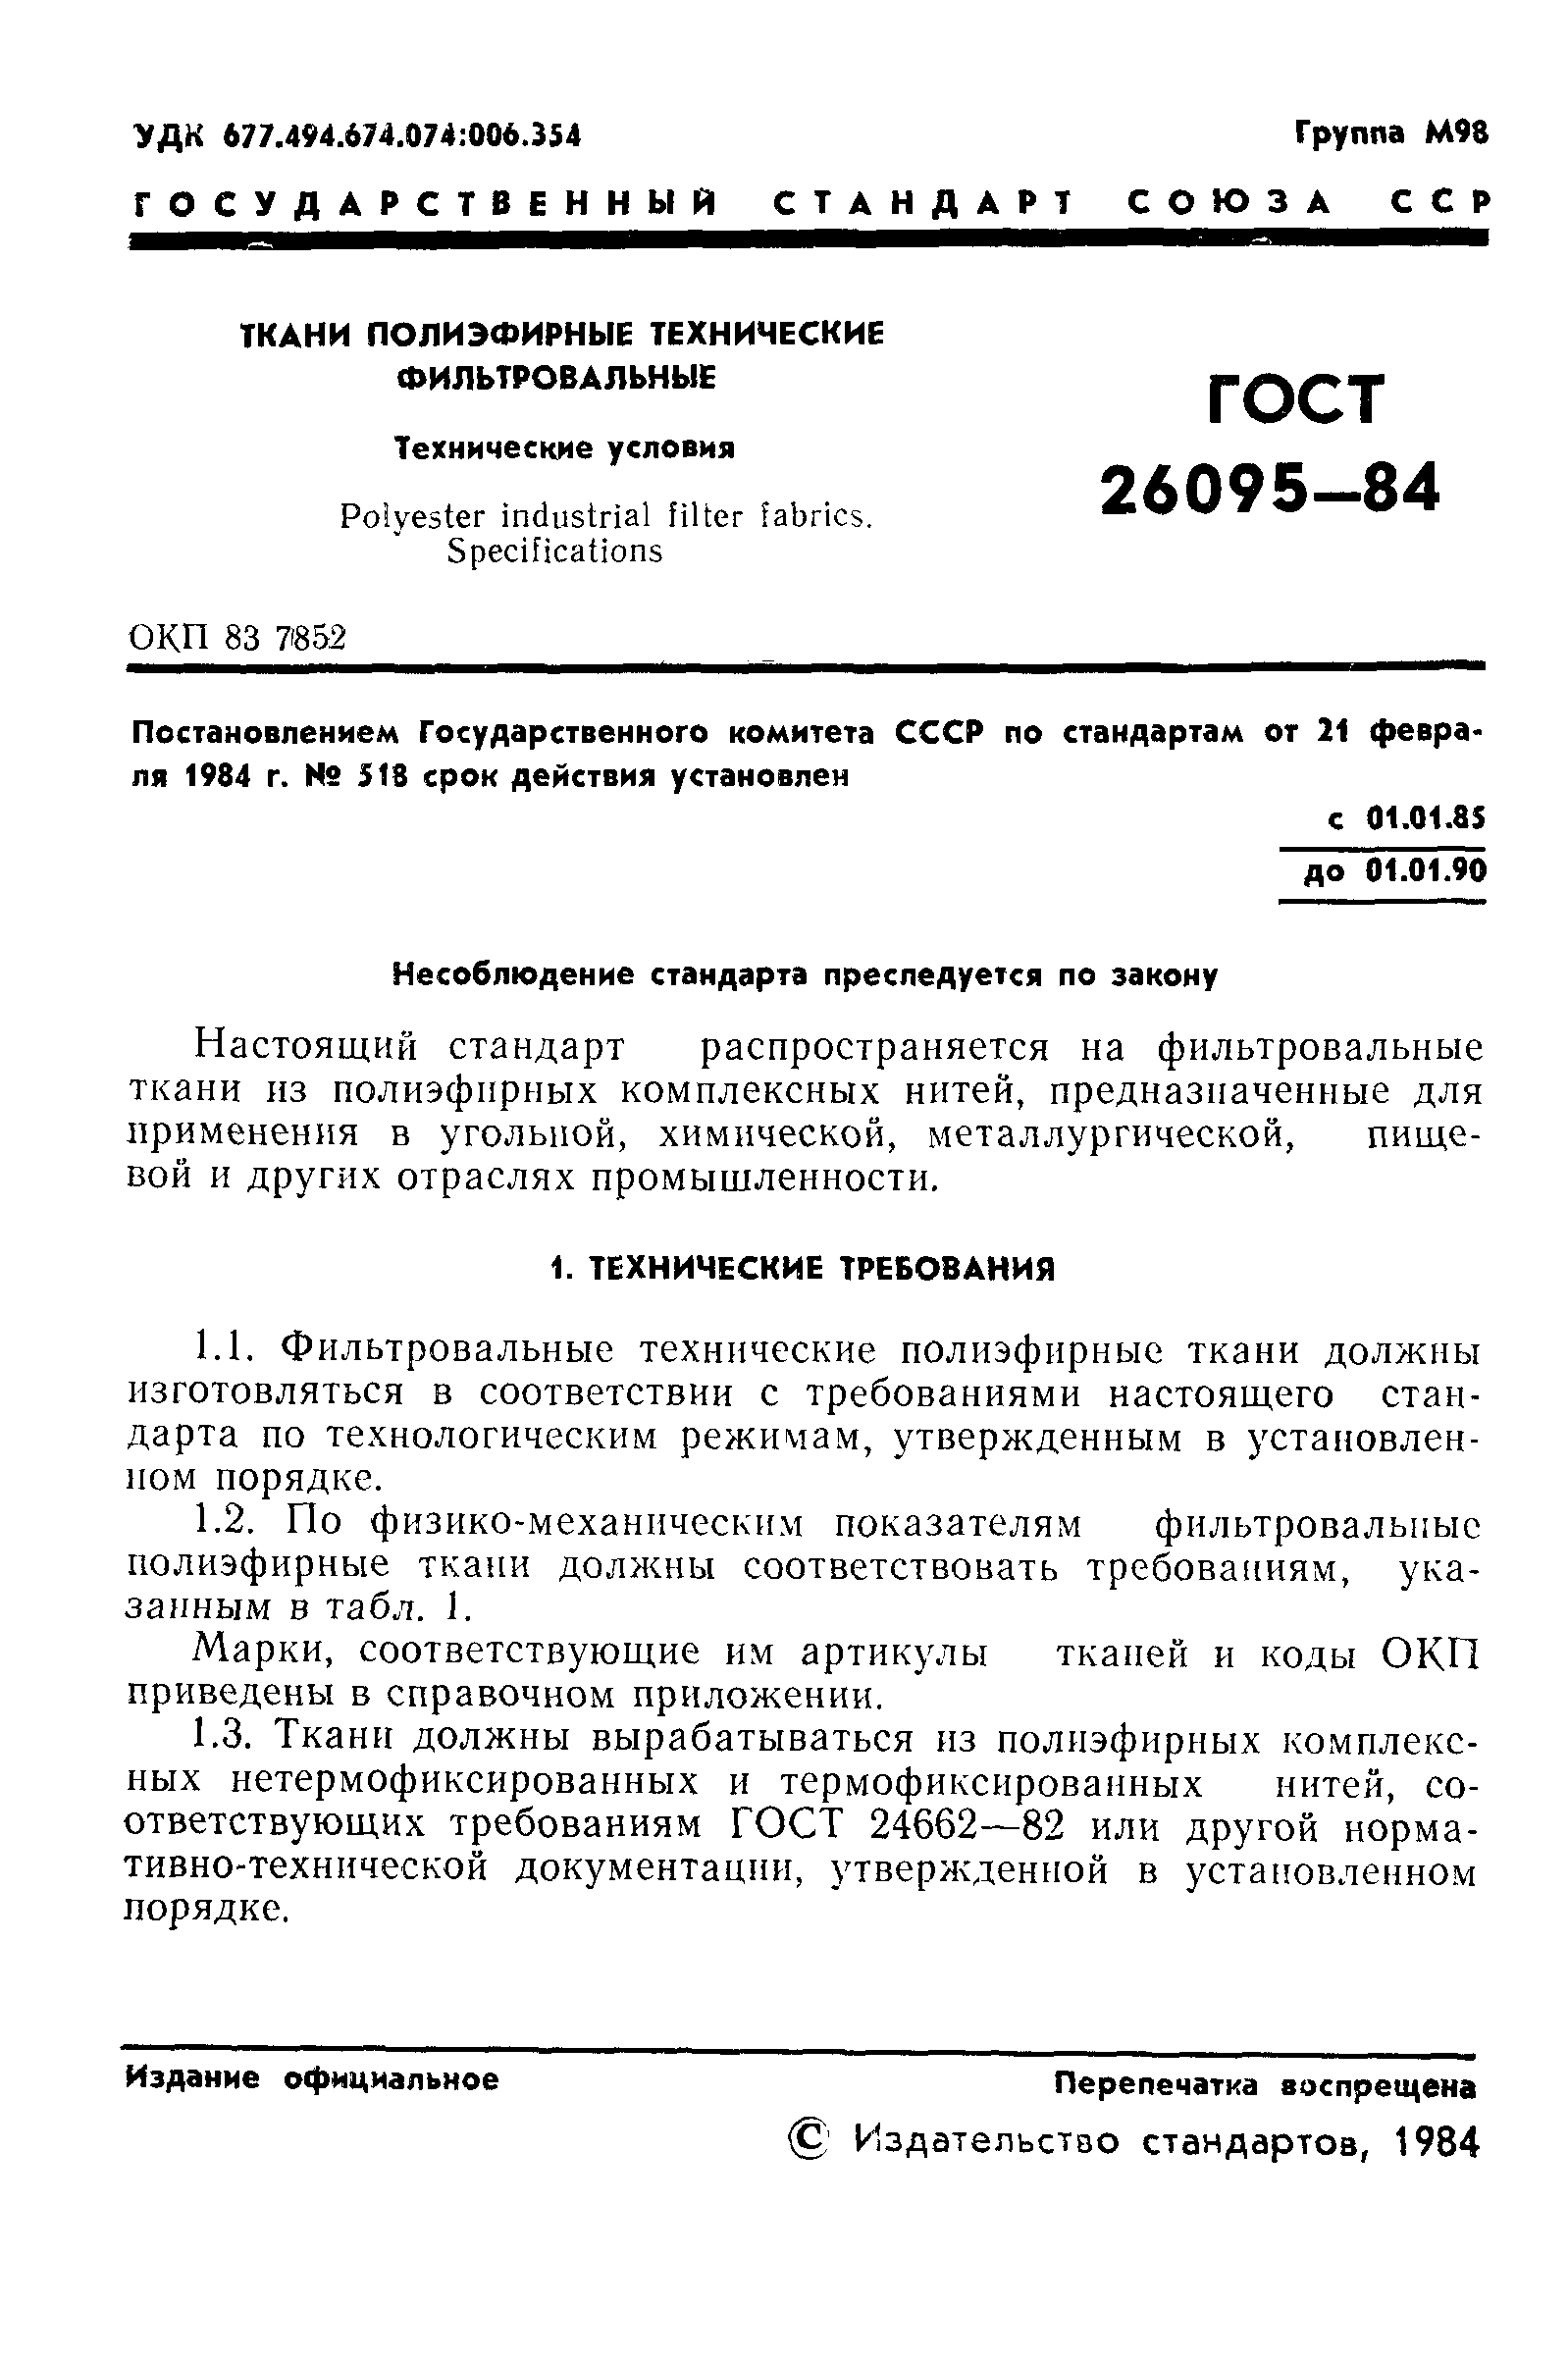 ГОСТ 26095-84